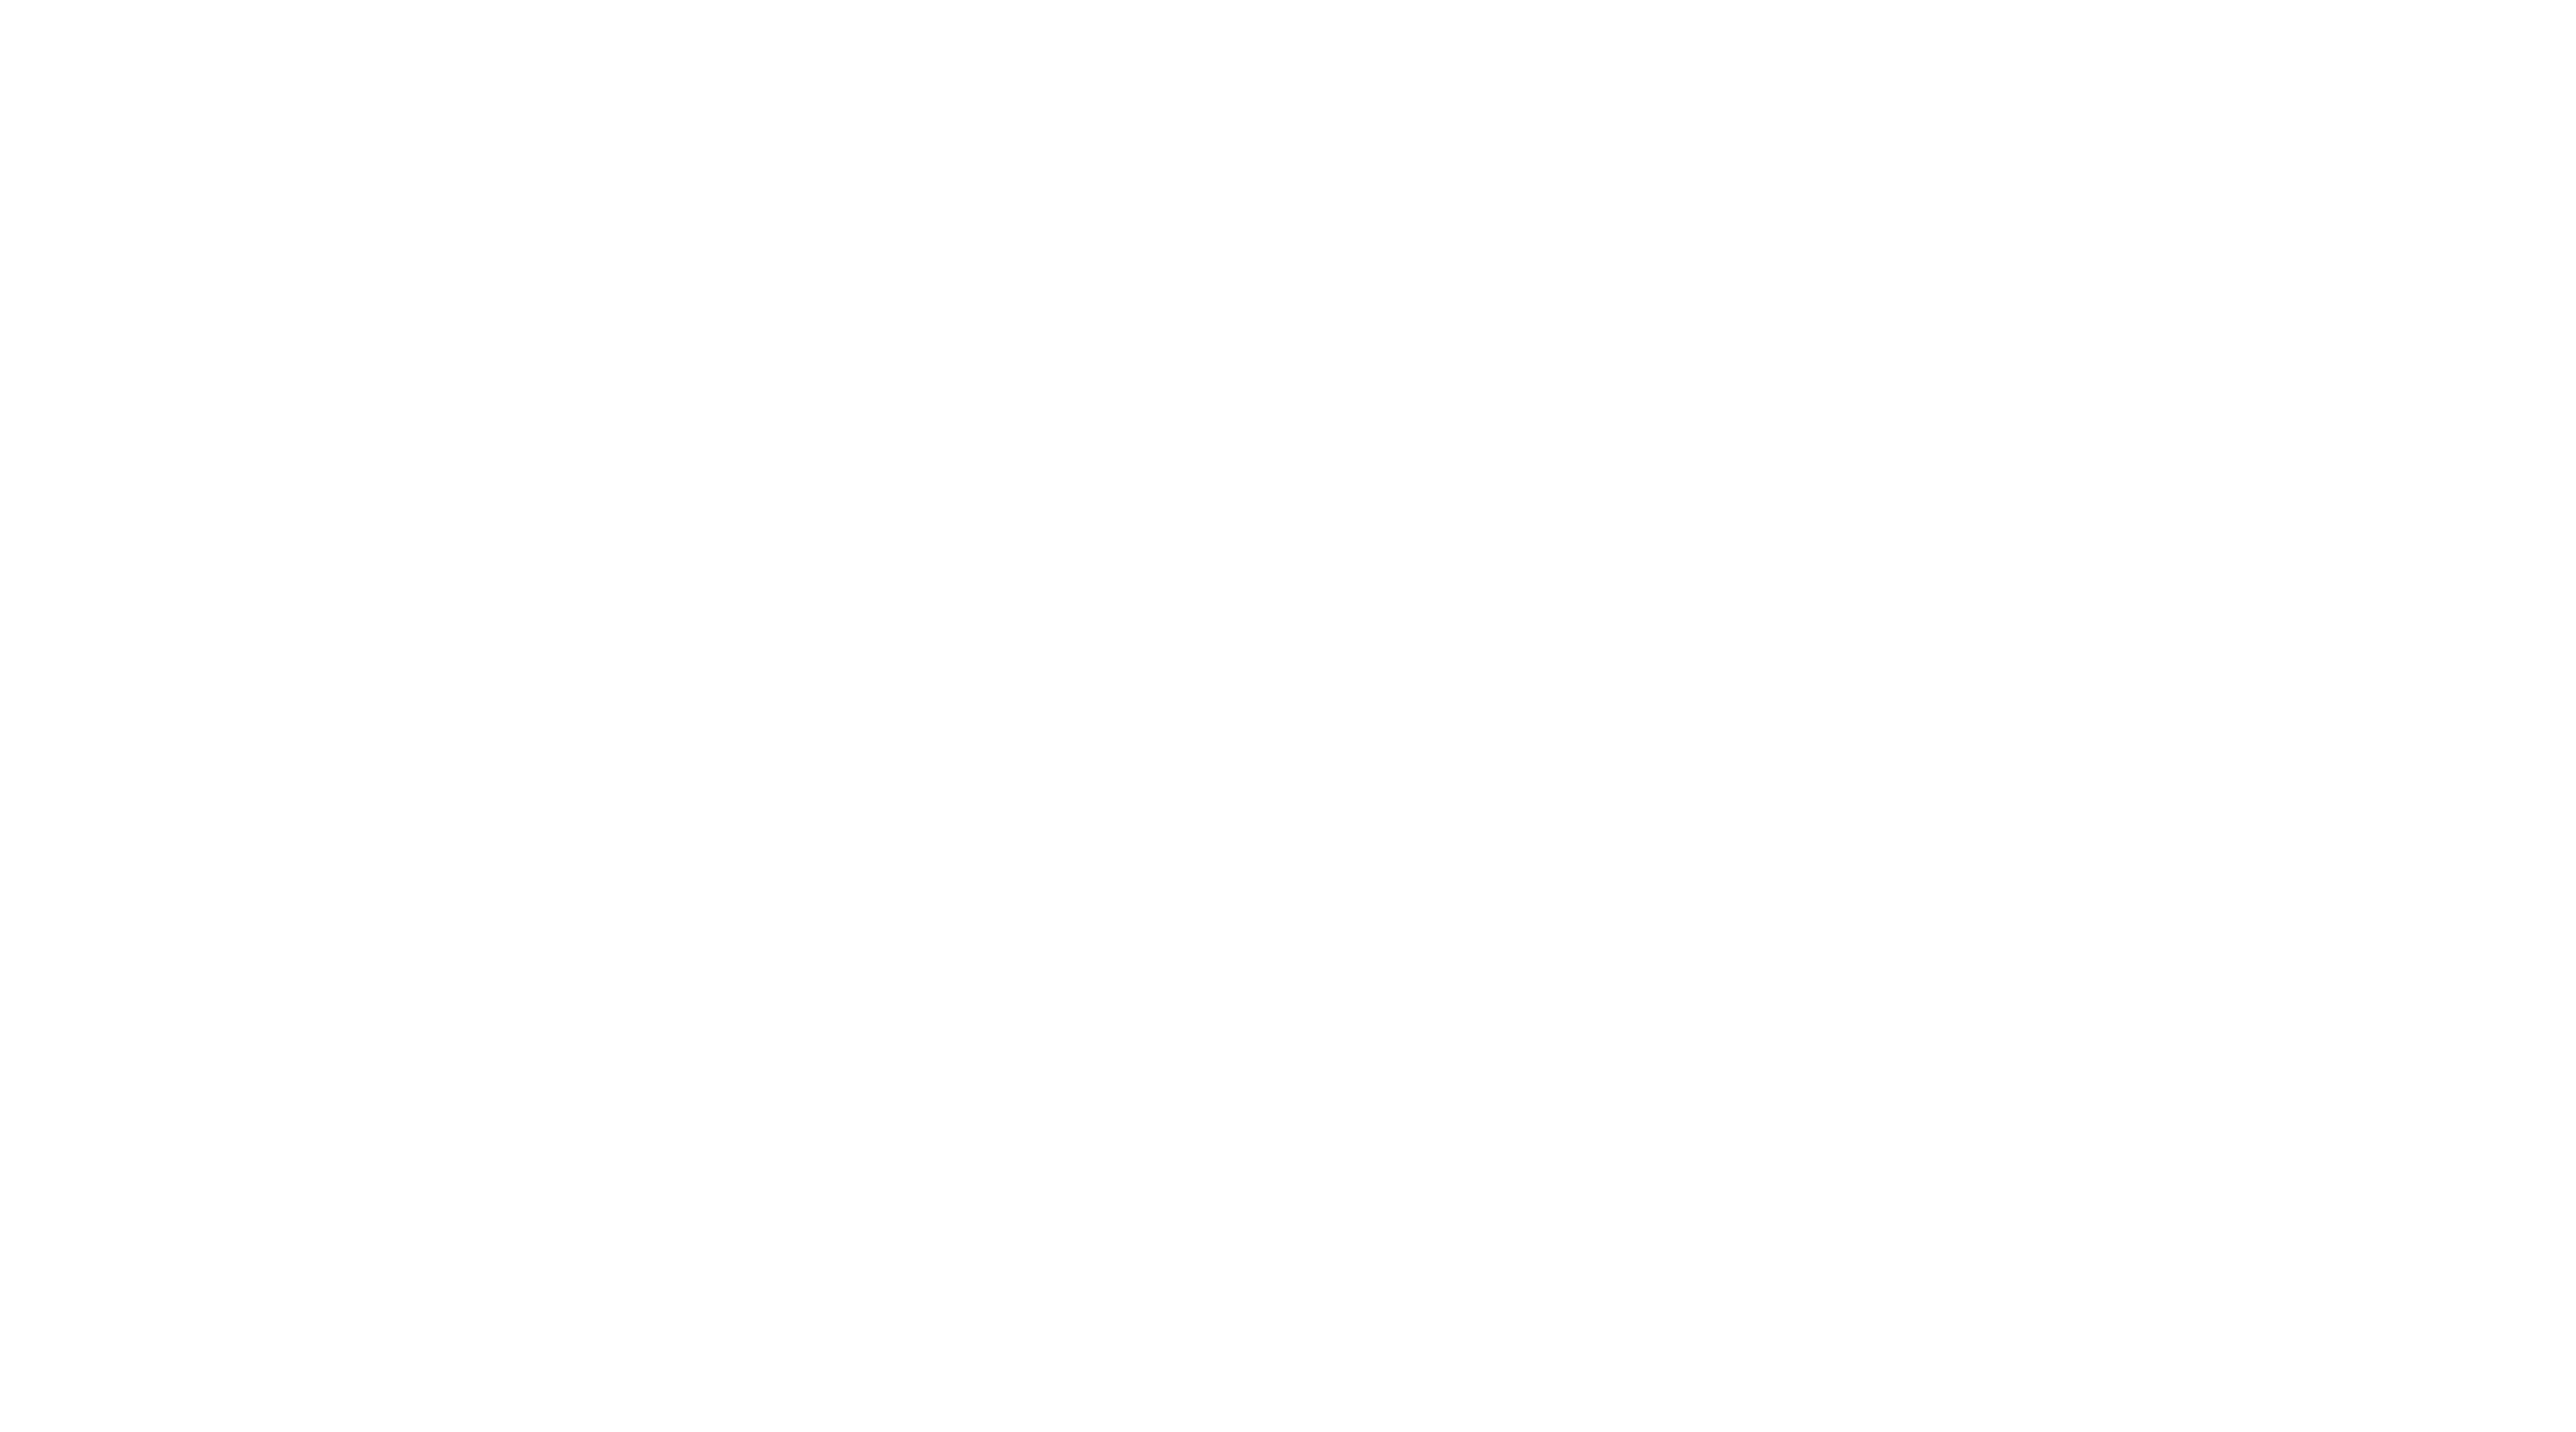 Sagebrush Hill Group, LLC logo